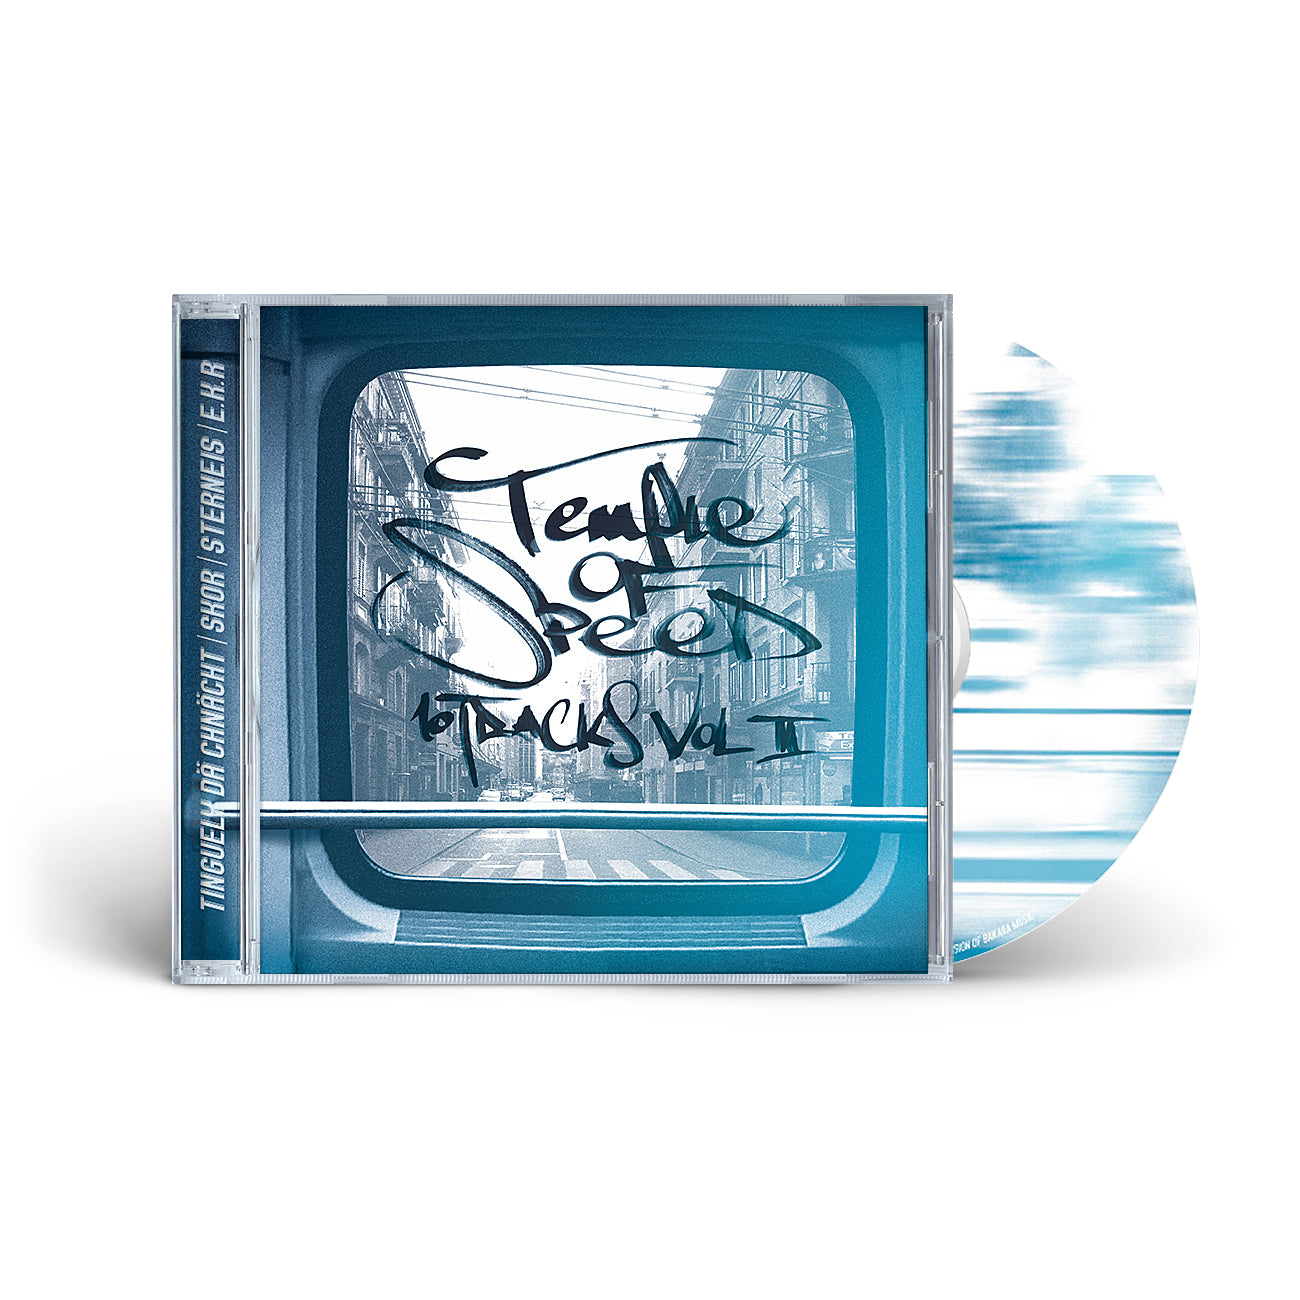 Temple of Speed | CD | 10 Tracks  – Vol. 2